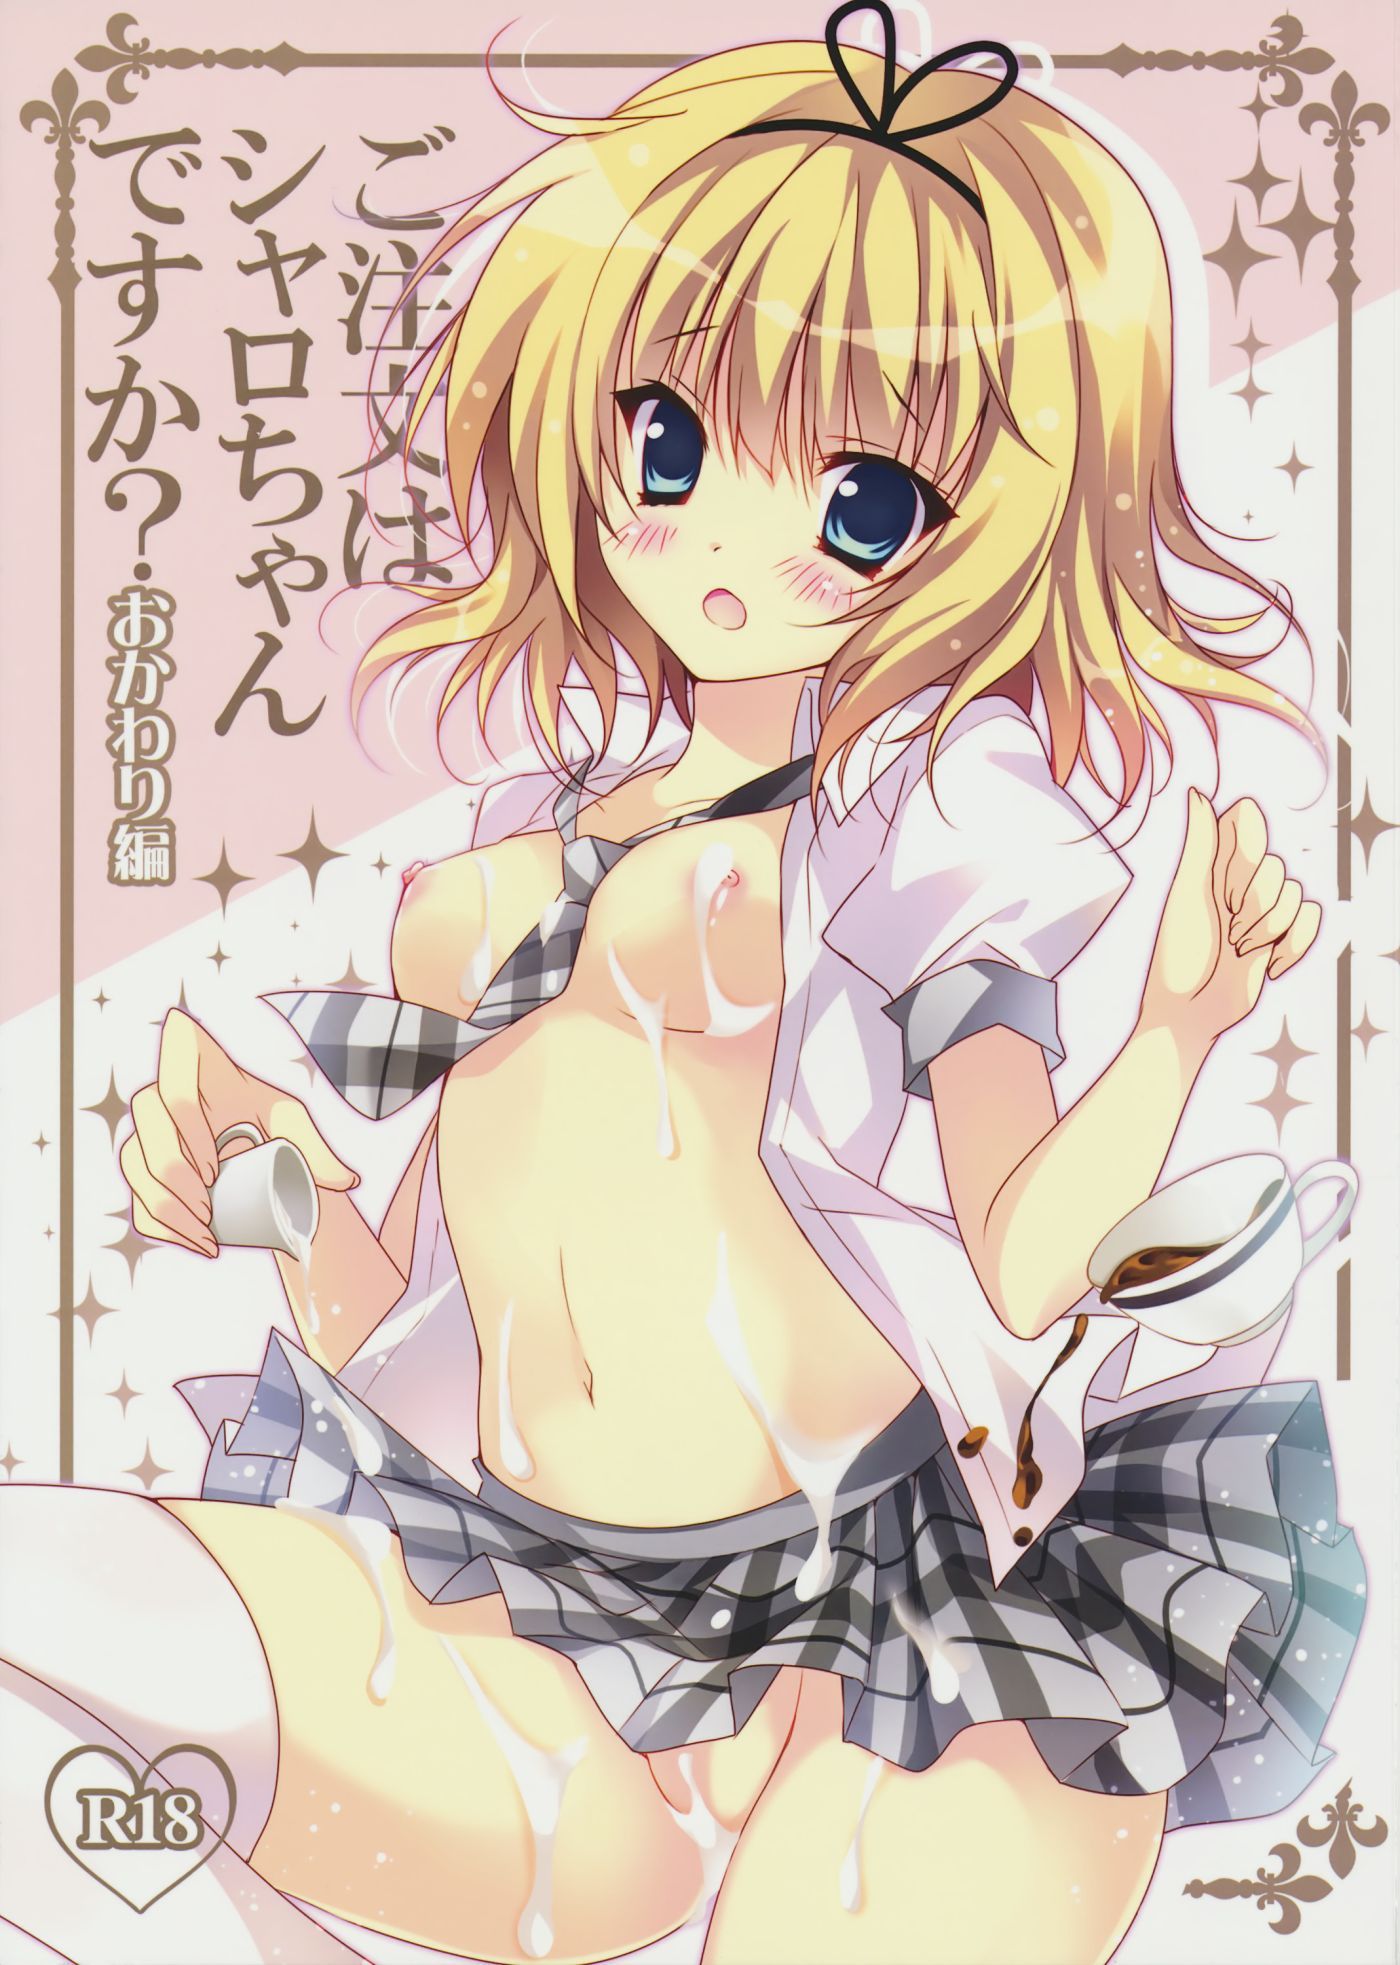 [Secondary] "is the order a rabbit?" Kirito Gauze Road Chan's cute secondary erotic image [Gochiusa] 12